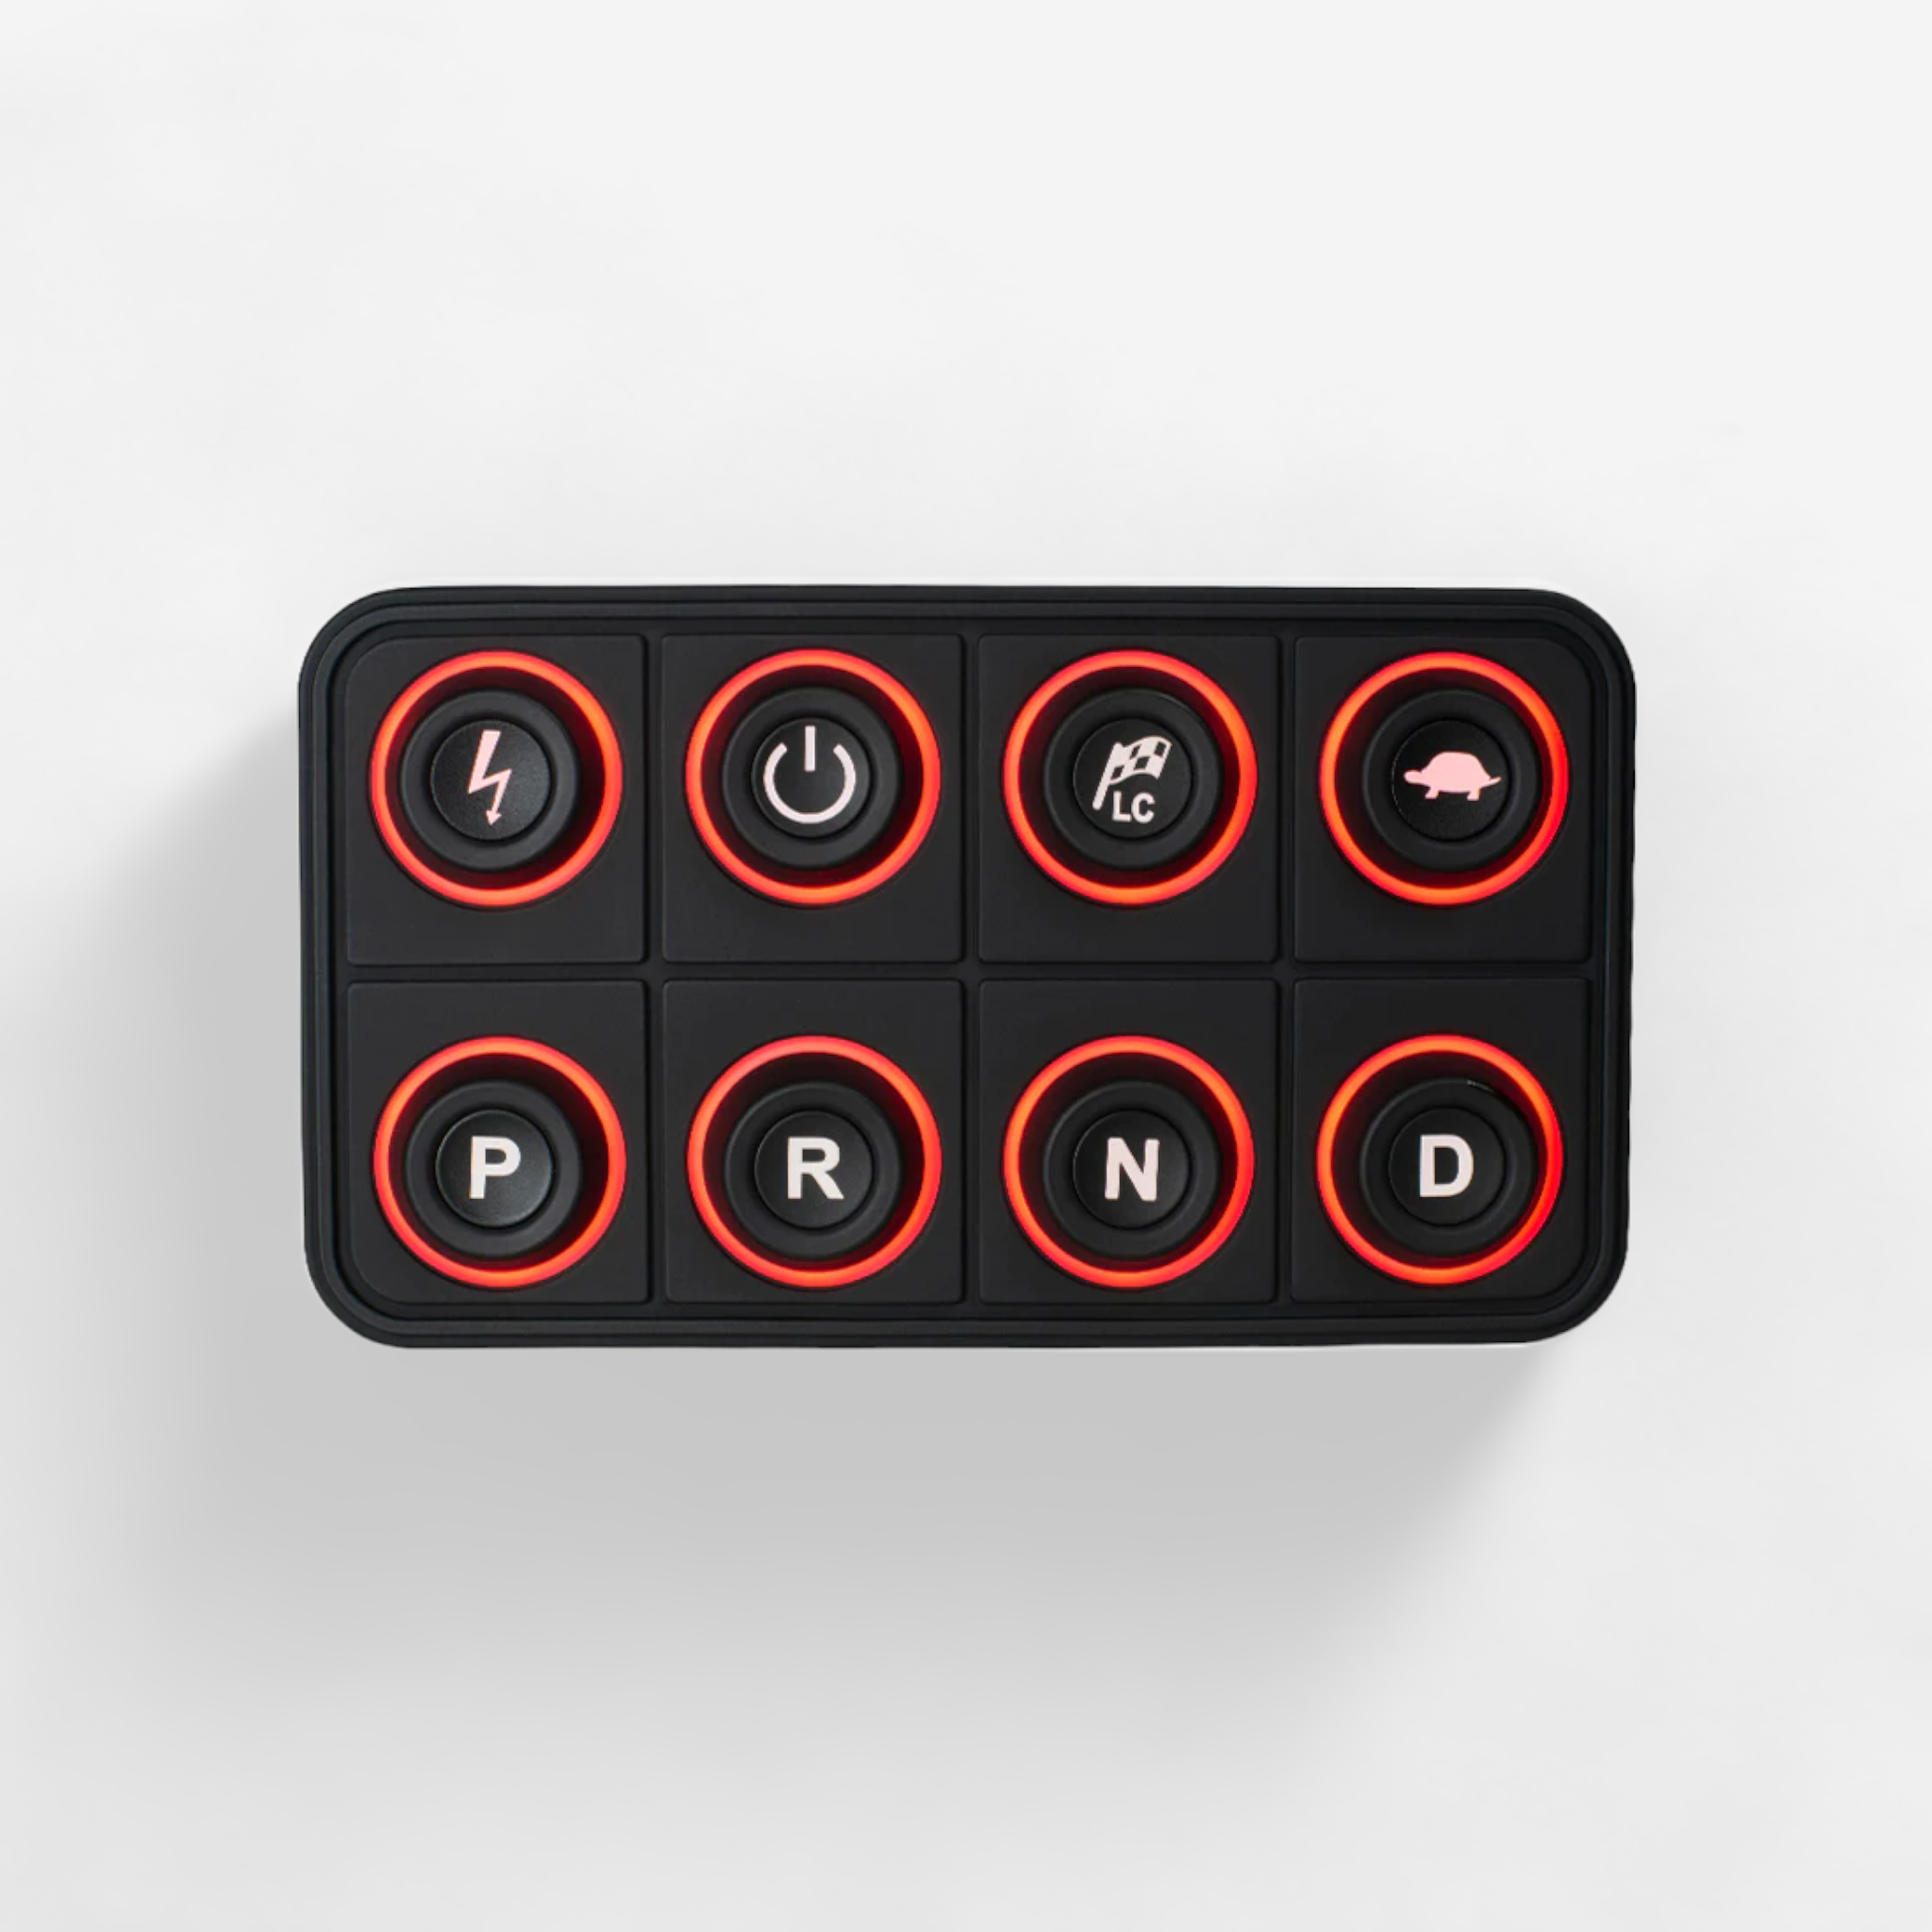 AEM 8 Button CAN Keypad